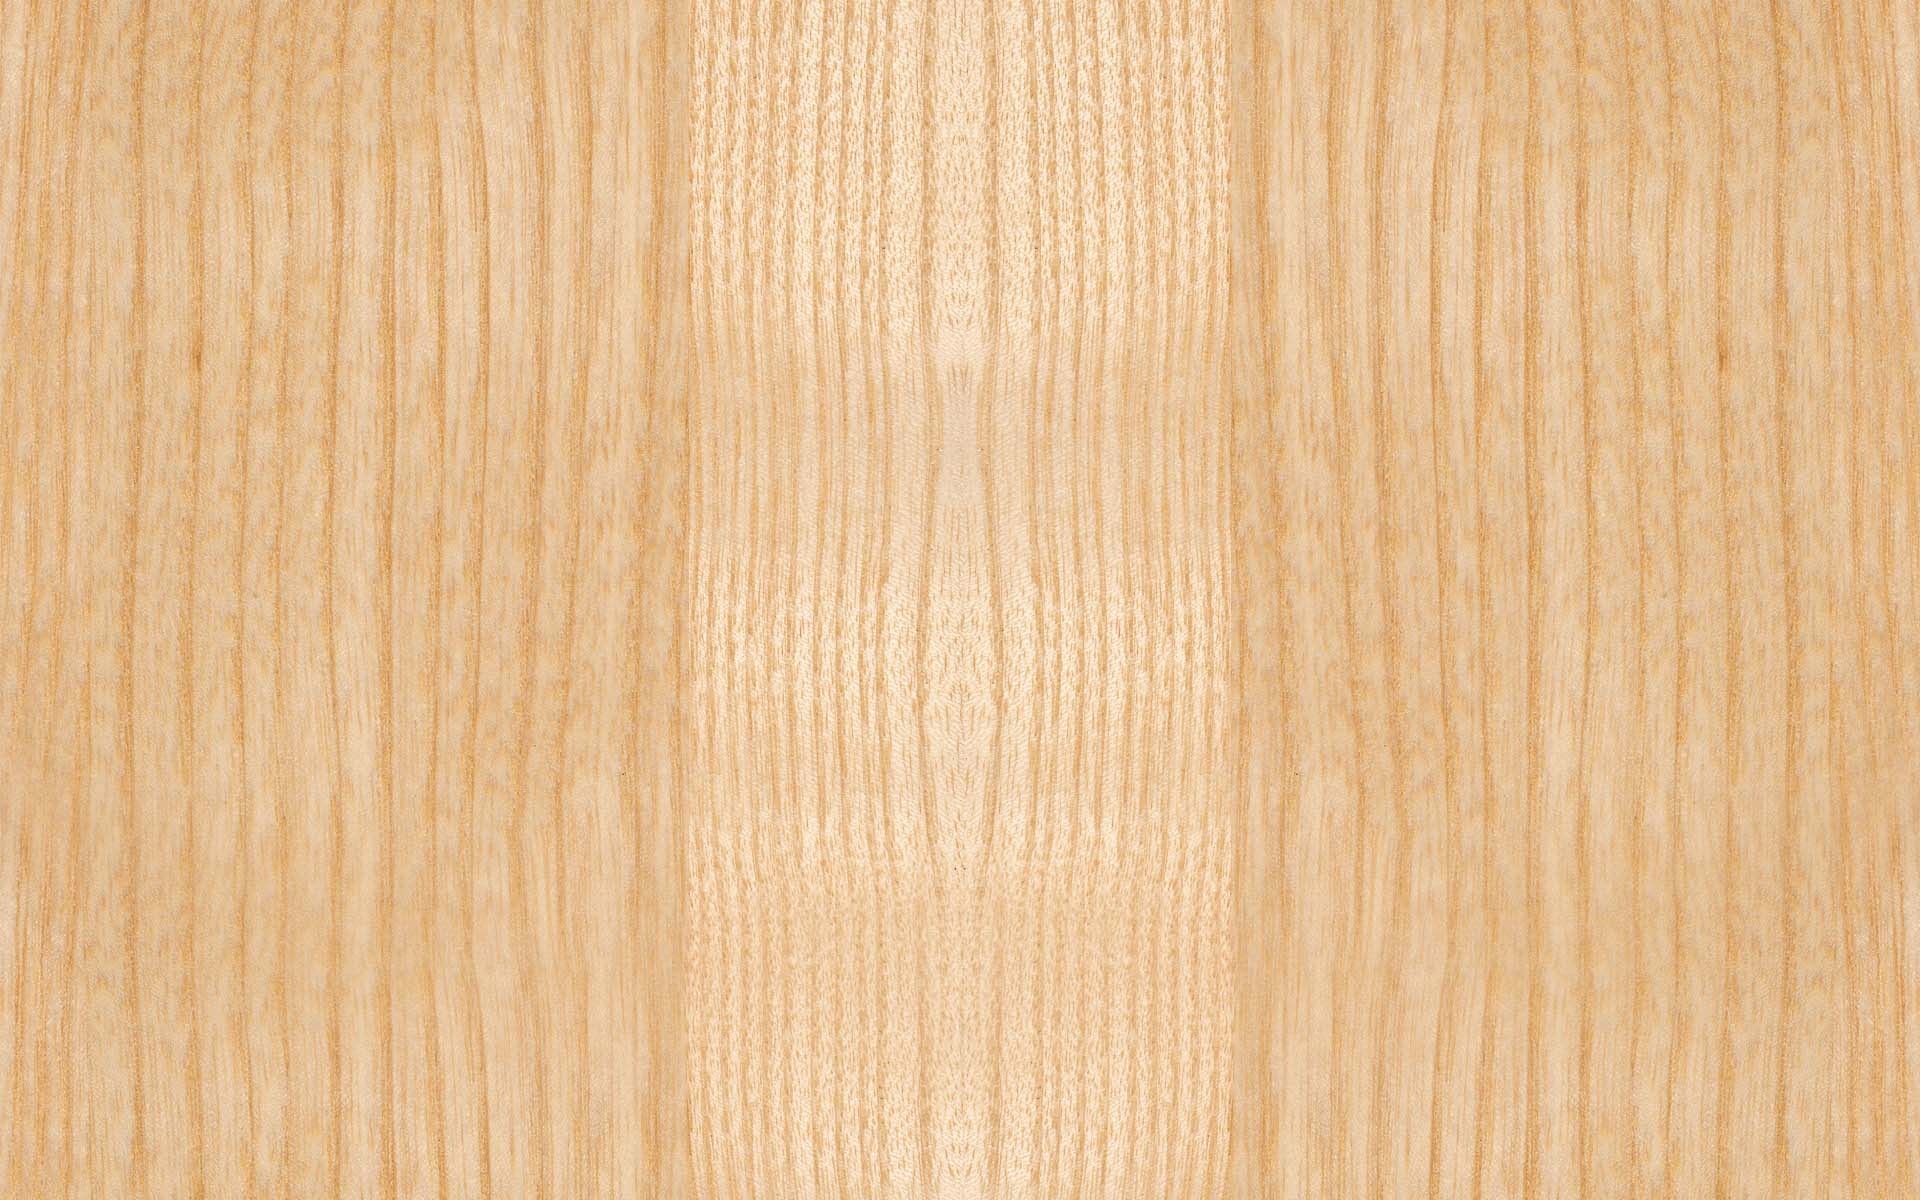 1920x1200 Wood Grain Wallpaper Hd